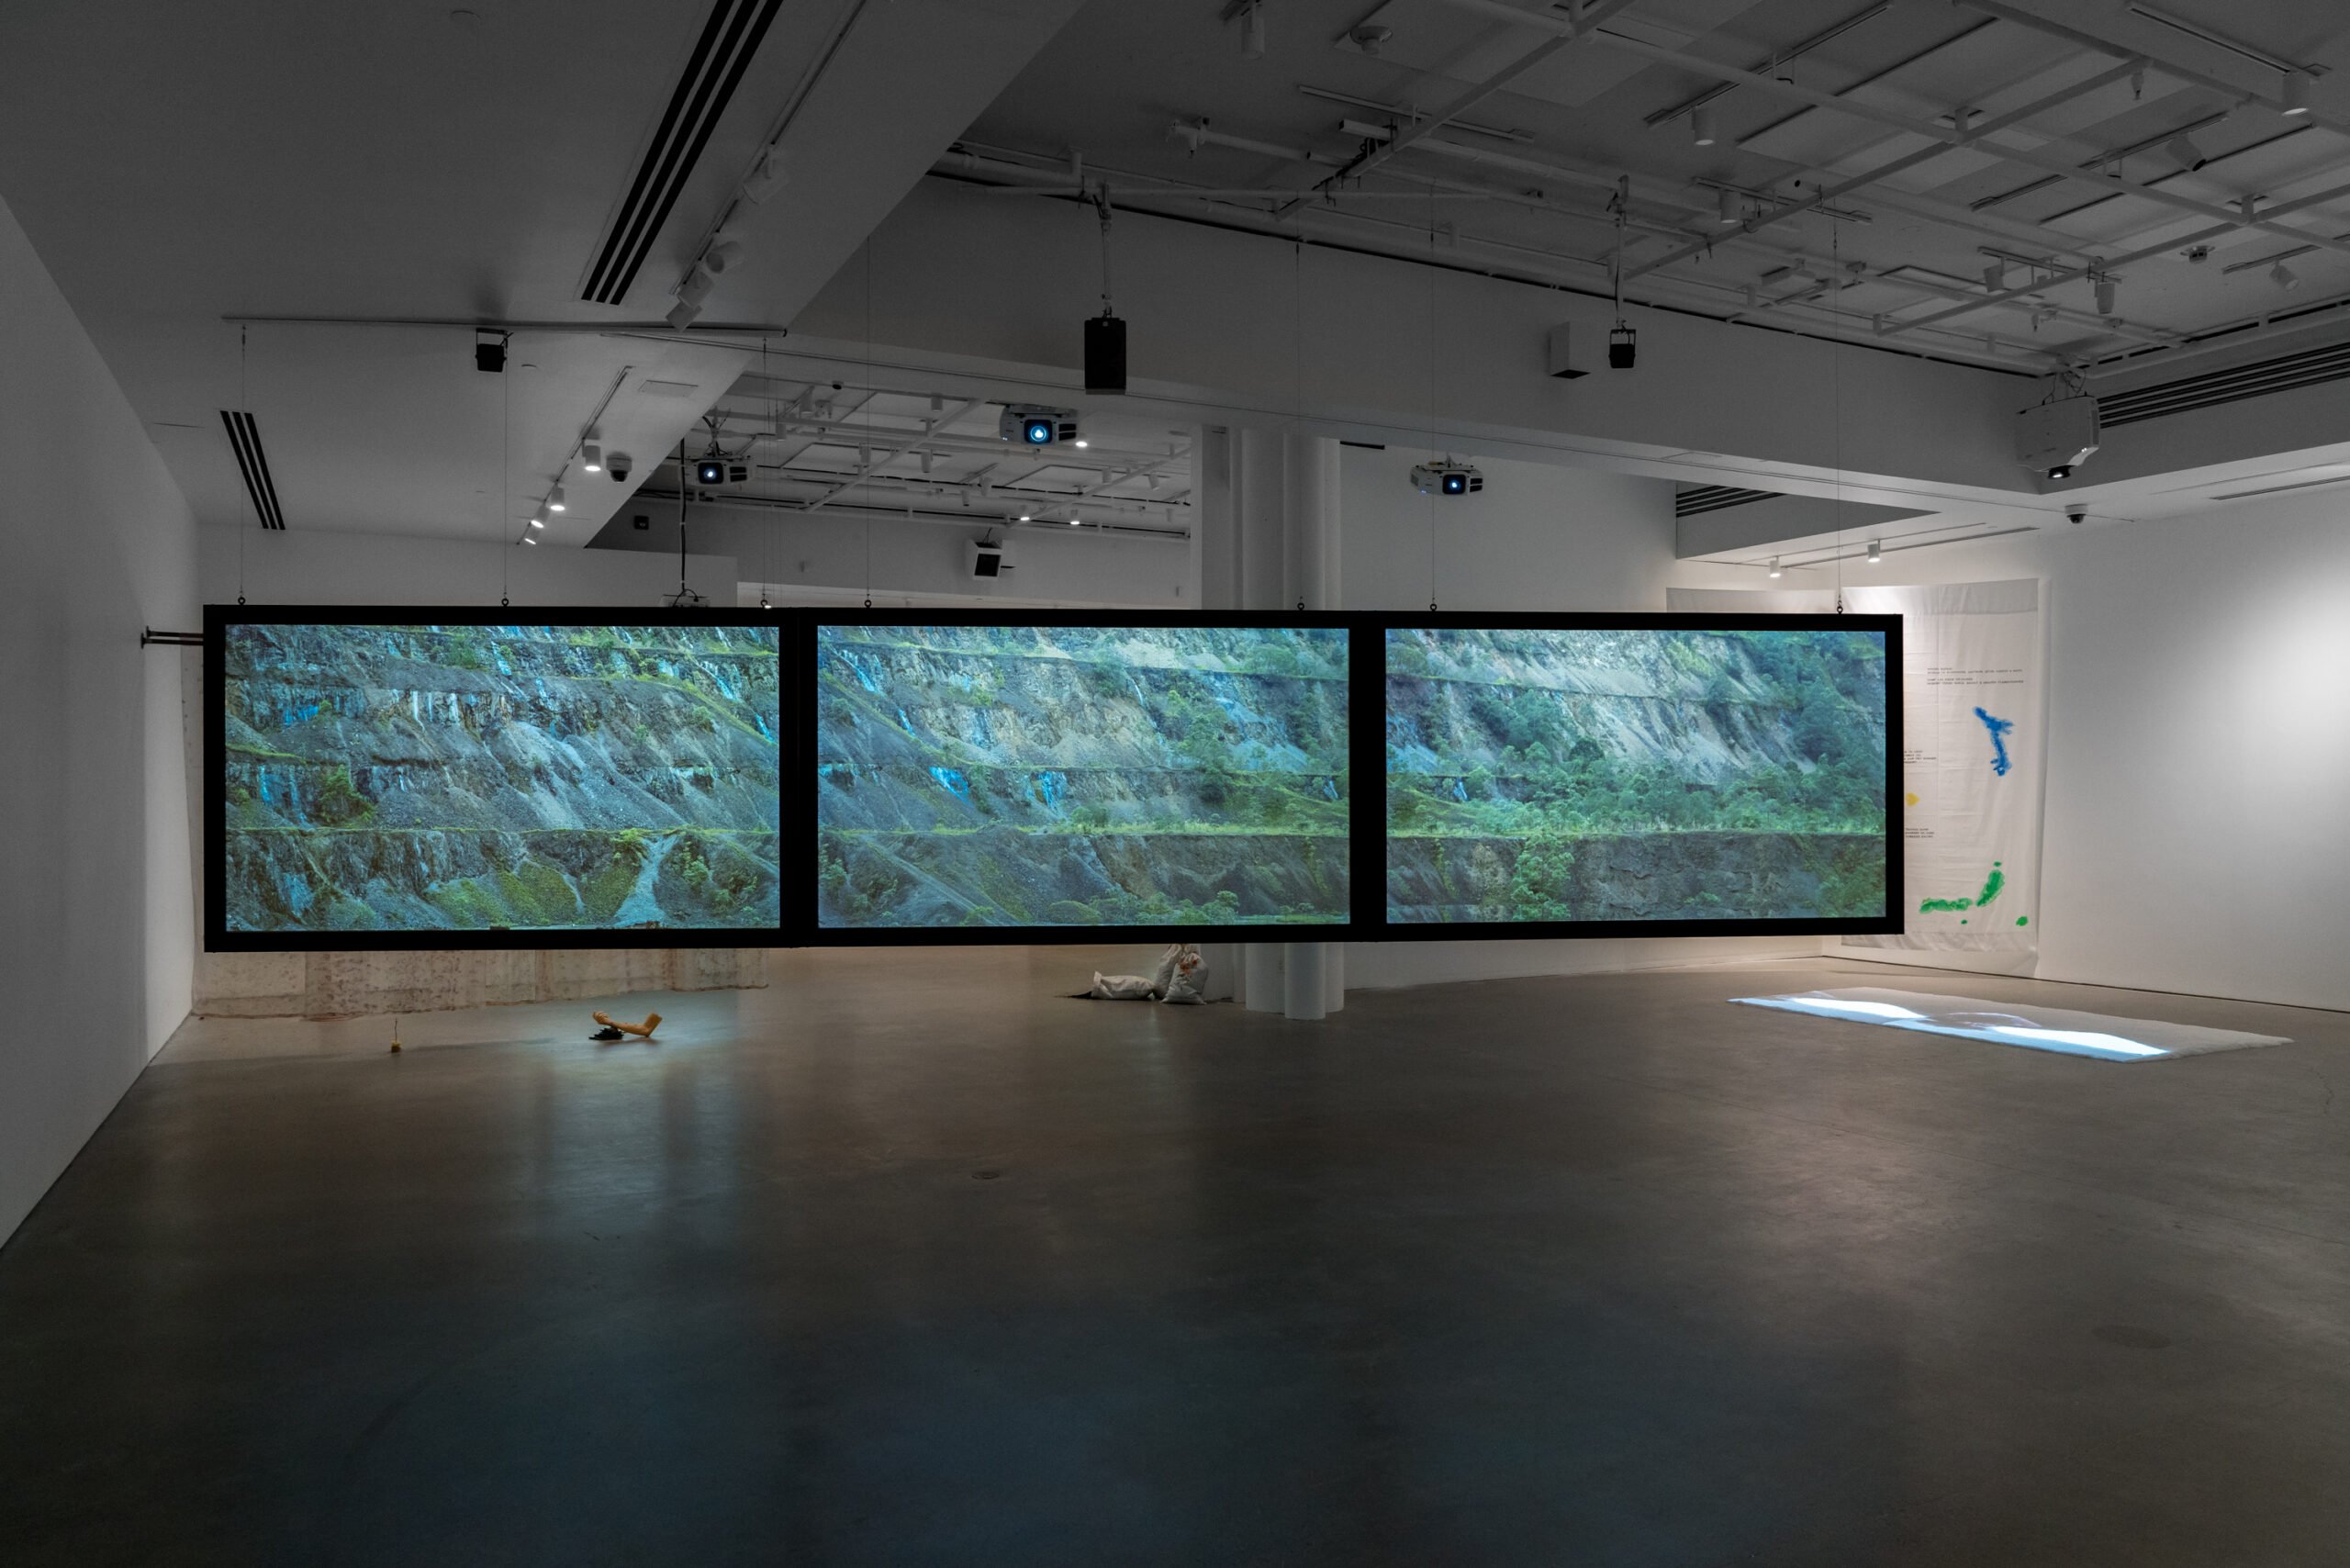 Taloi Havini, Habitat 2017, 2017, vue d’installation à la Galerie de l’UQAM dans le cadre de MOMENTA 2021. Photo : Jean-Michael Seminaro